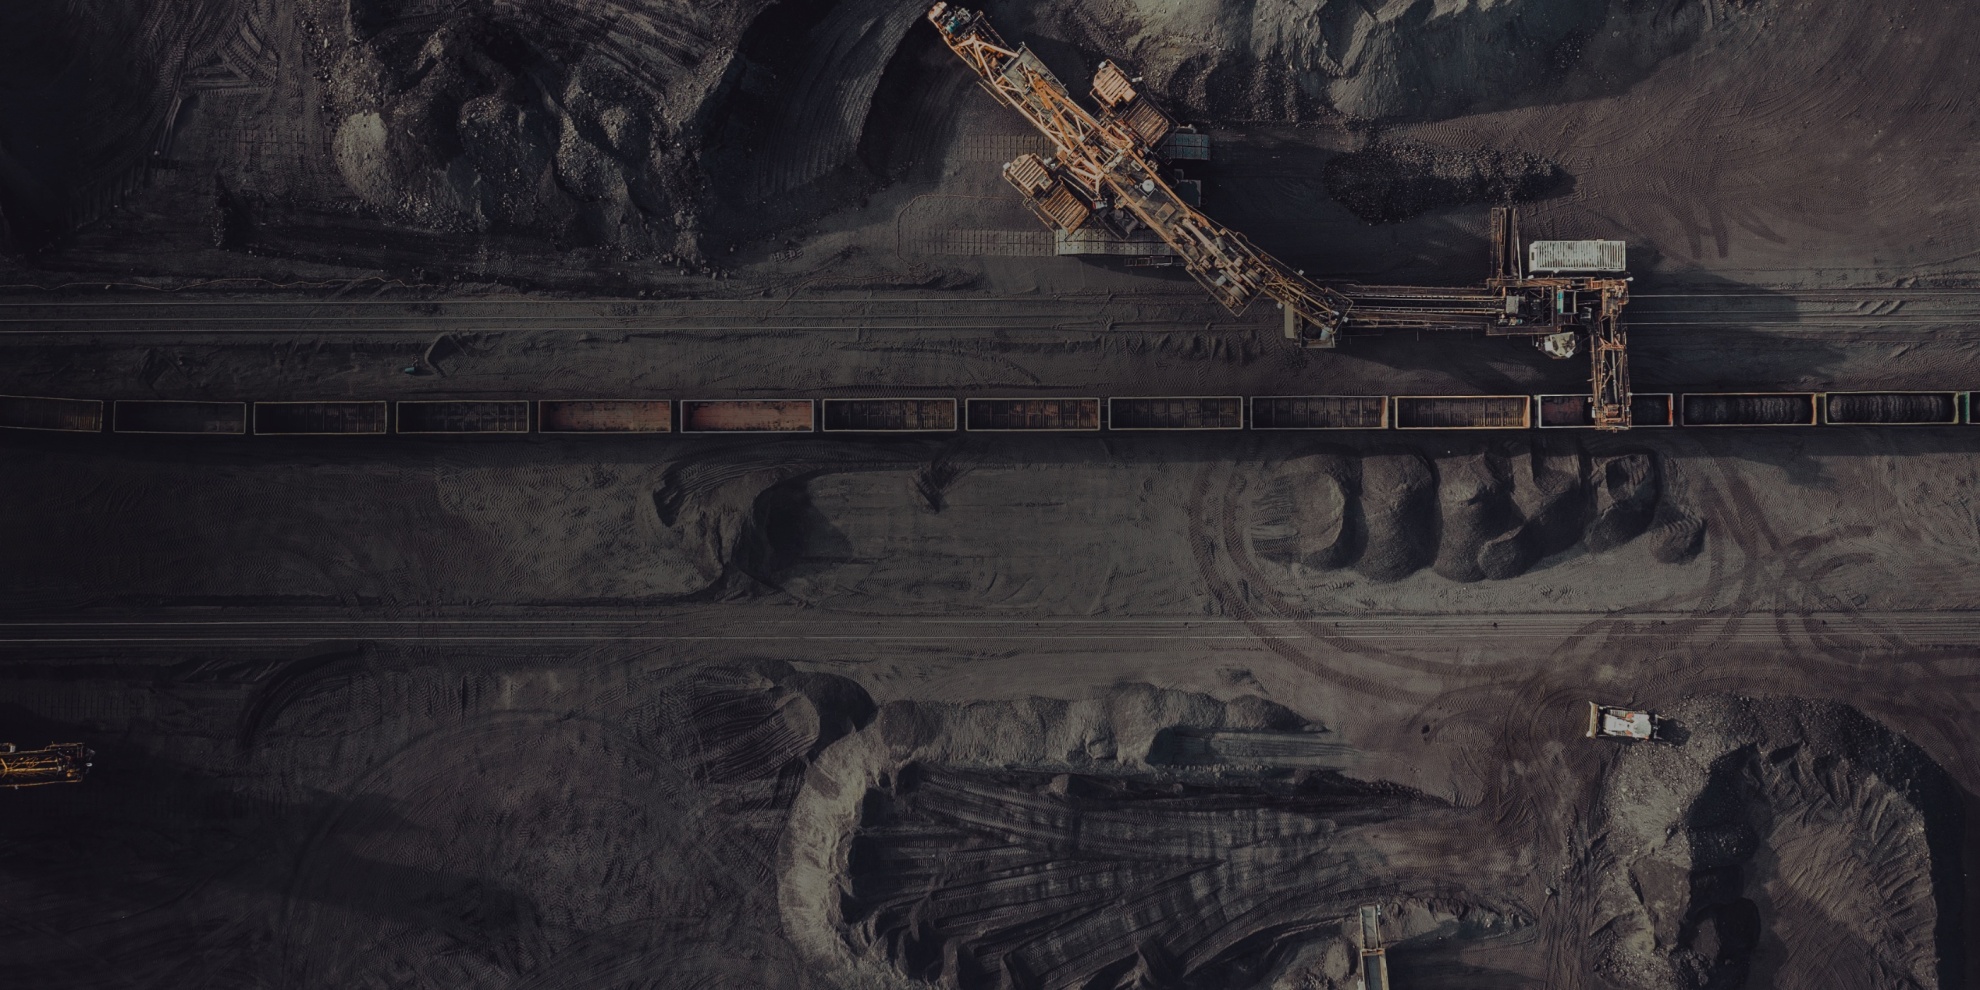 opencast coal mining